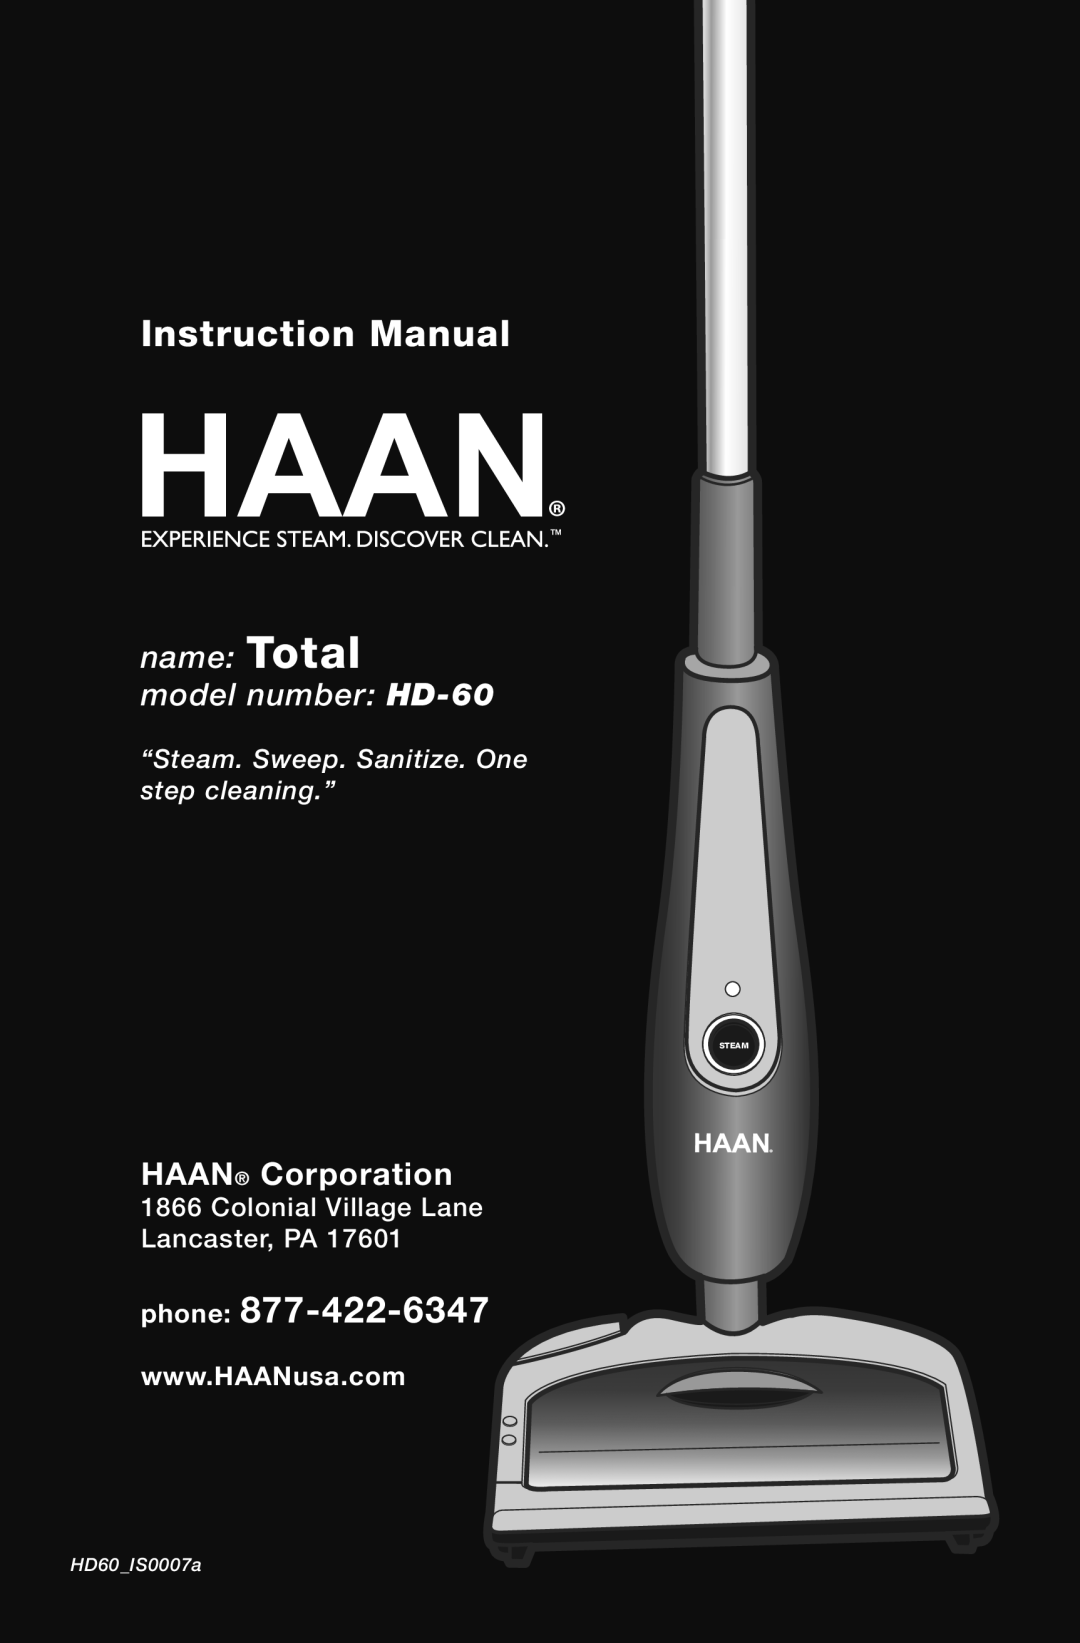 Haan instruction manual phone, HAAN Corporation, name Total model number HD-60, Colonial Village Lane Lancaster, PA 